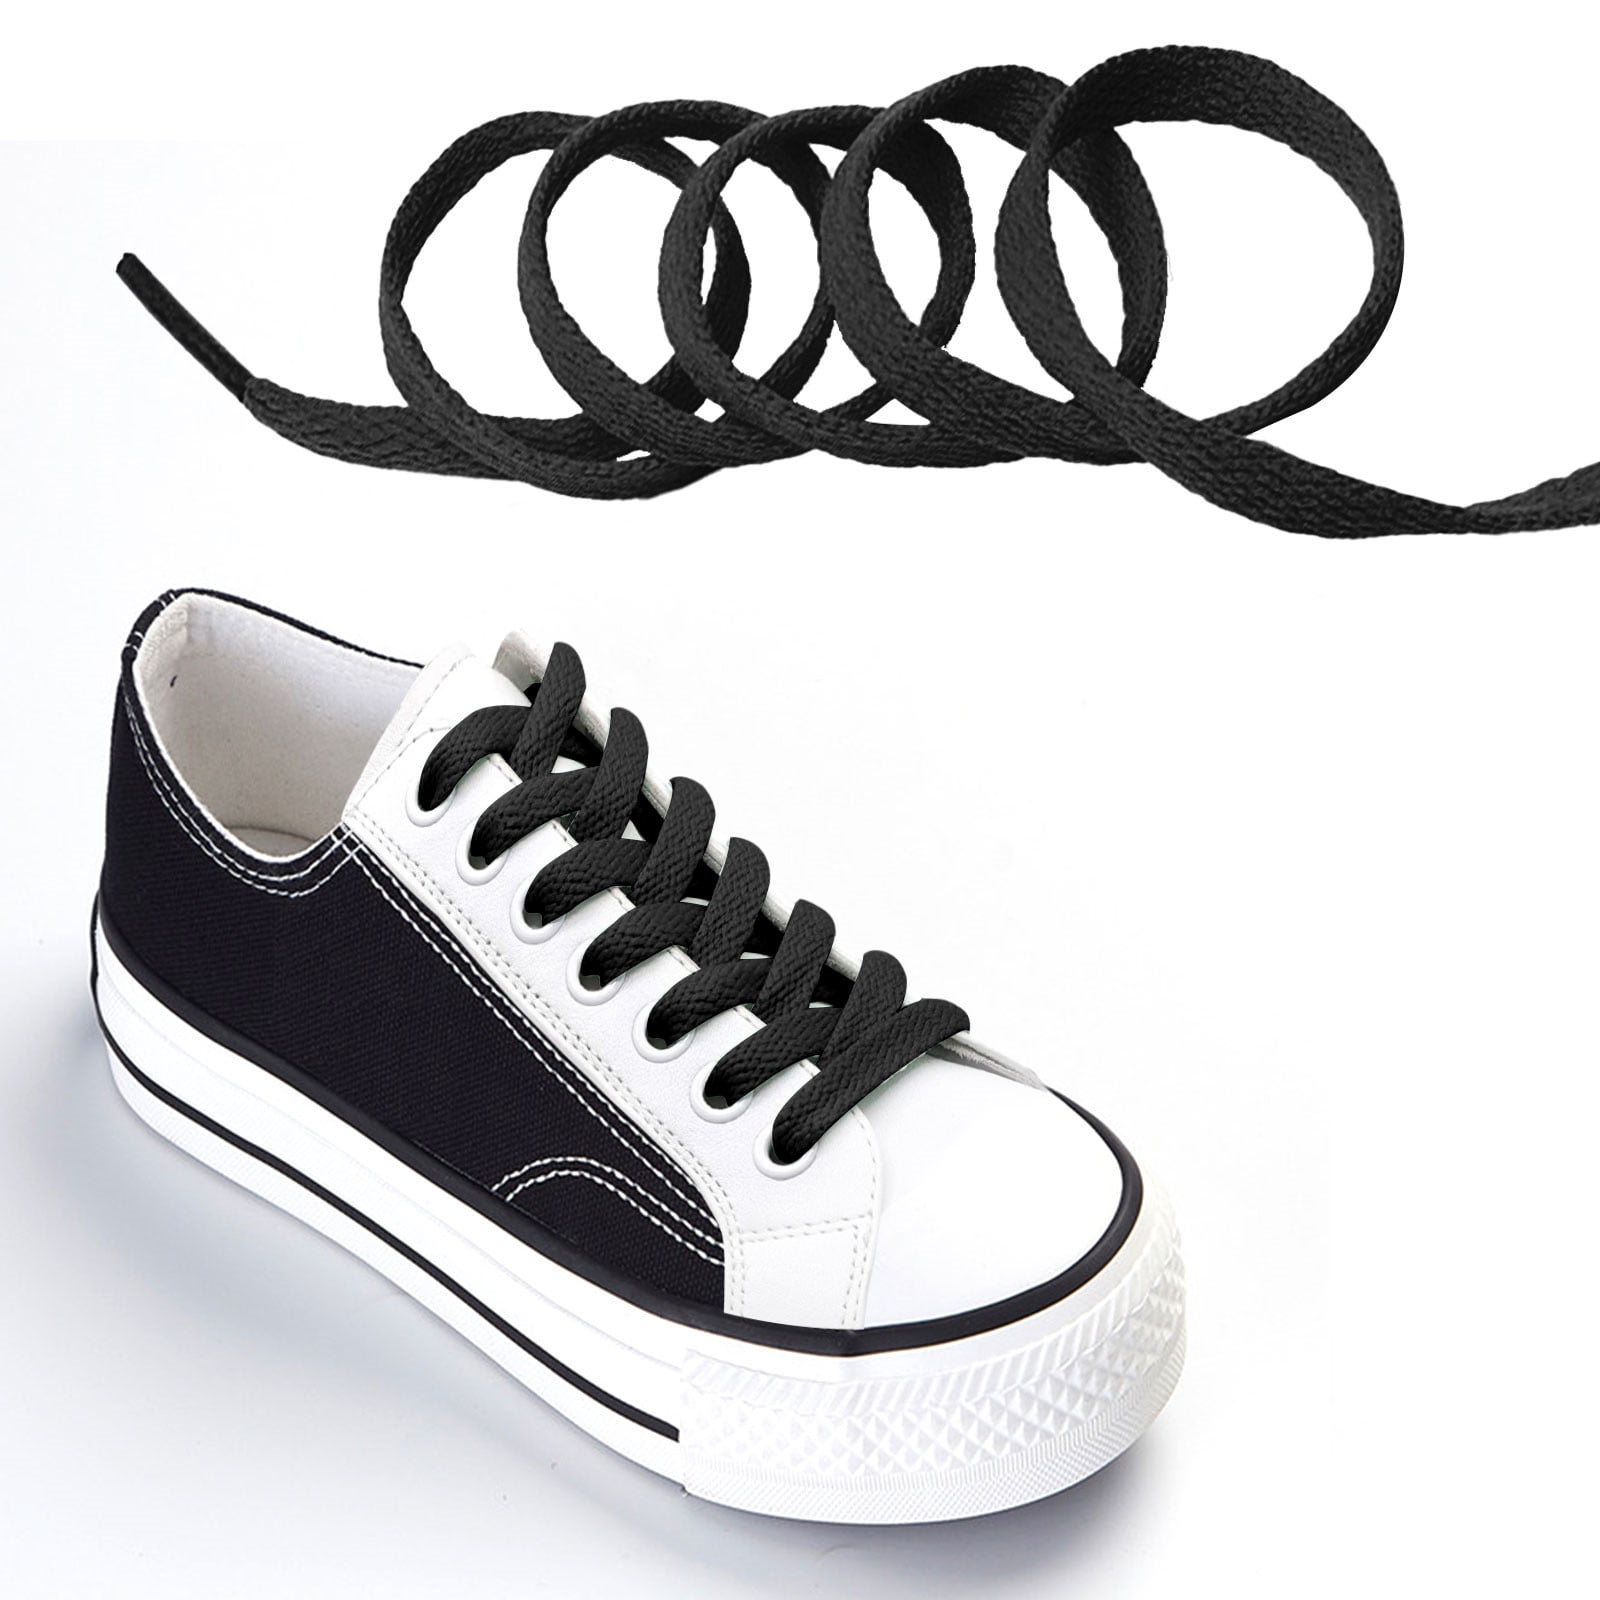 Leisure Shoes Boots Shoe Laces Black Flat 8mm Wide 120cm Long For Trainers 